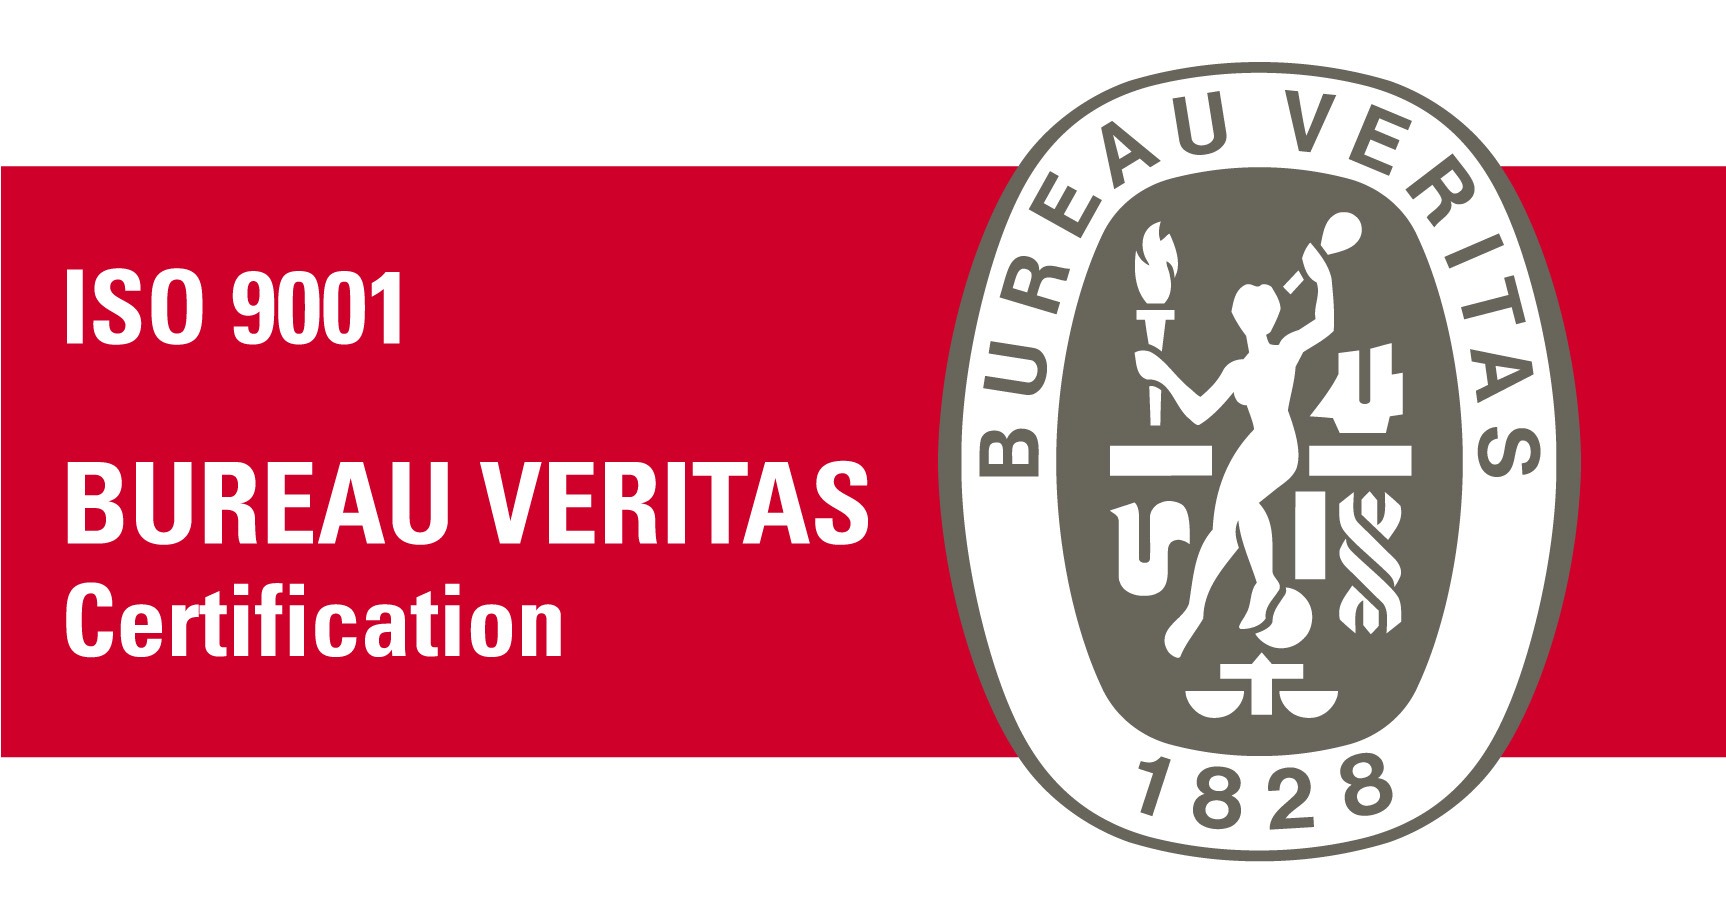 Bureau_Veritas_Certification_ISO9001